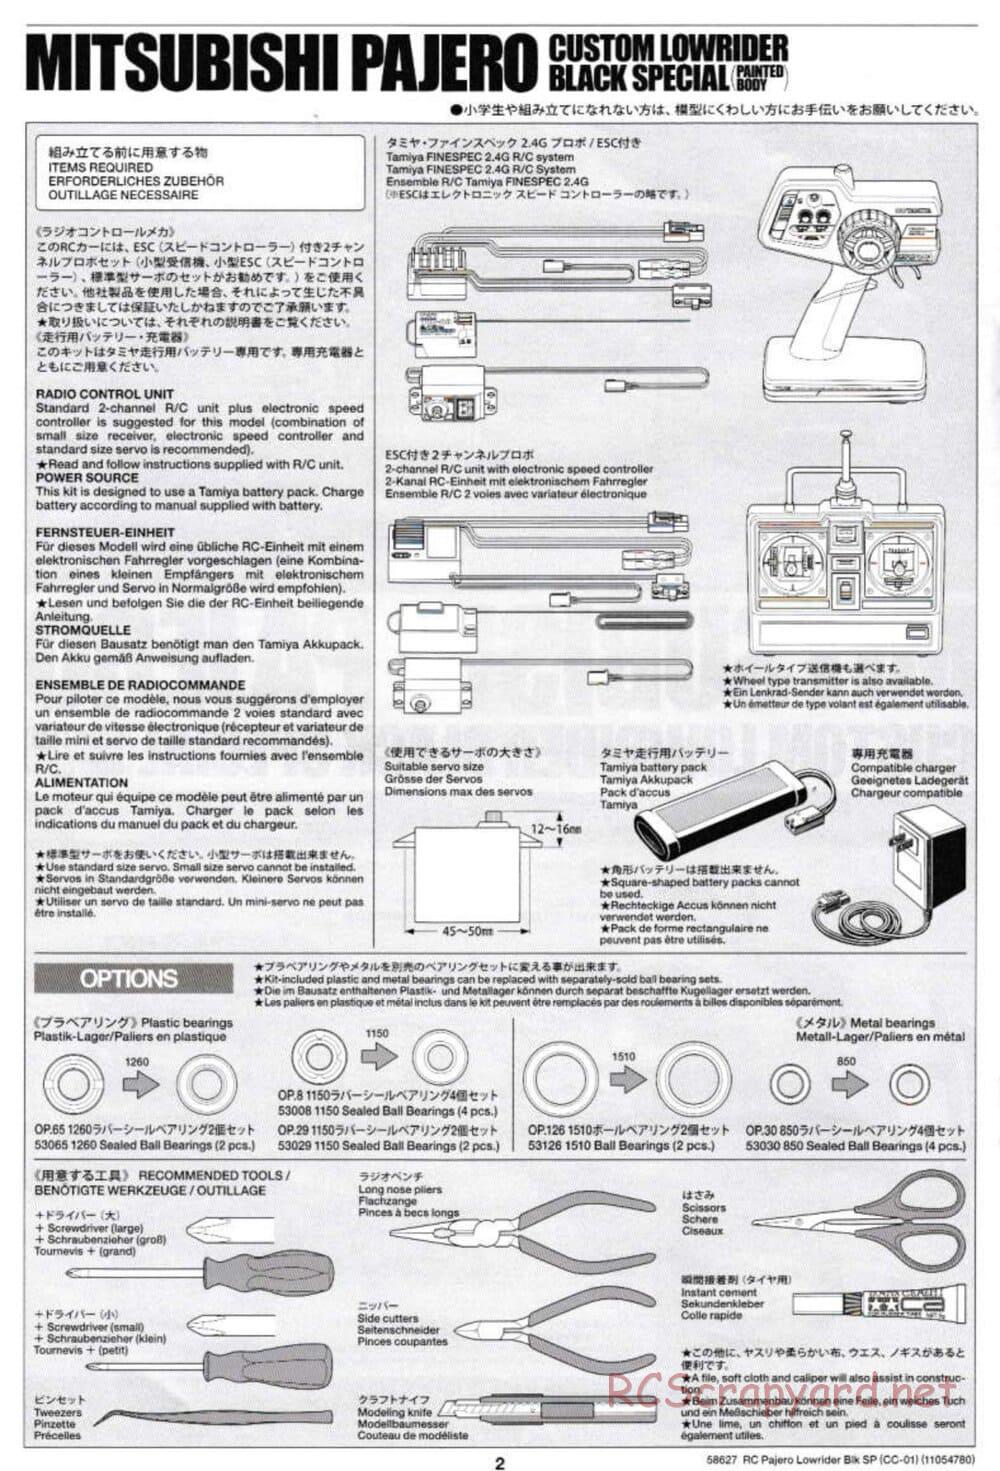 Tamiya - Mitsubishi Pajero Custom Lowrider Black Special - CC-01 Chassis - Manual - Page 2